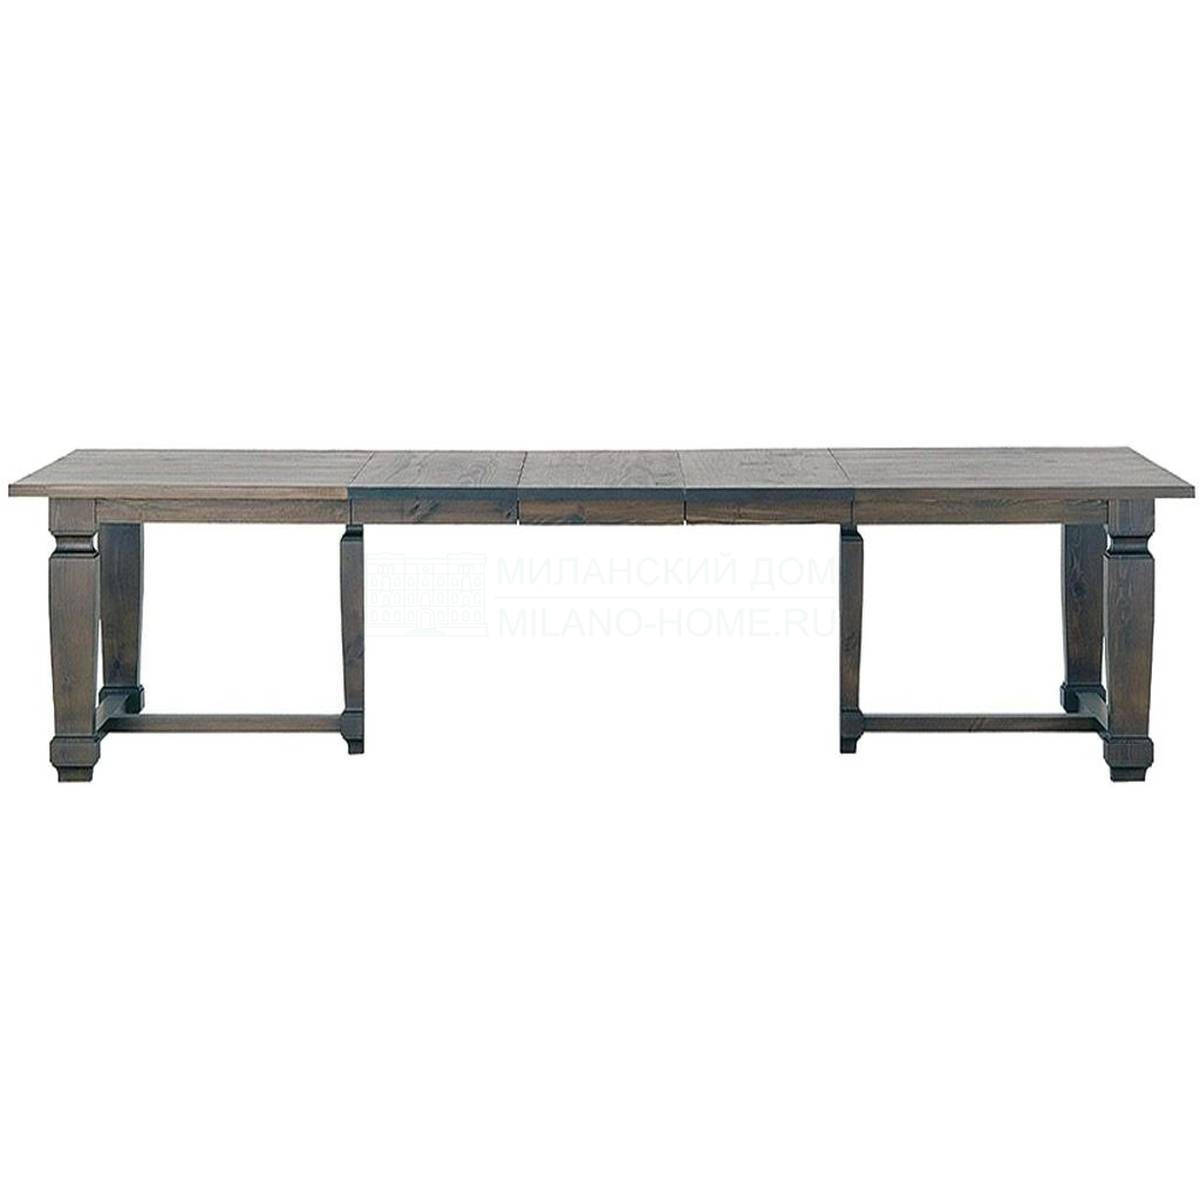 Обеденный стол F-216101 dining table из Испании фабрики GUADARTE